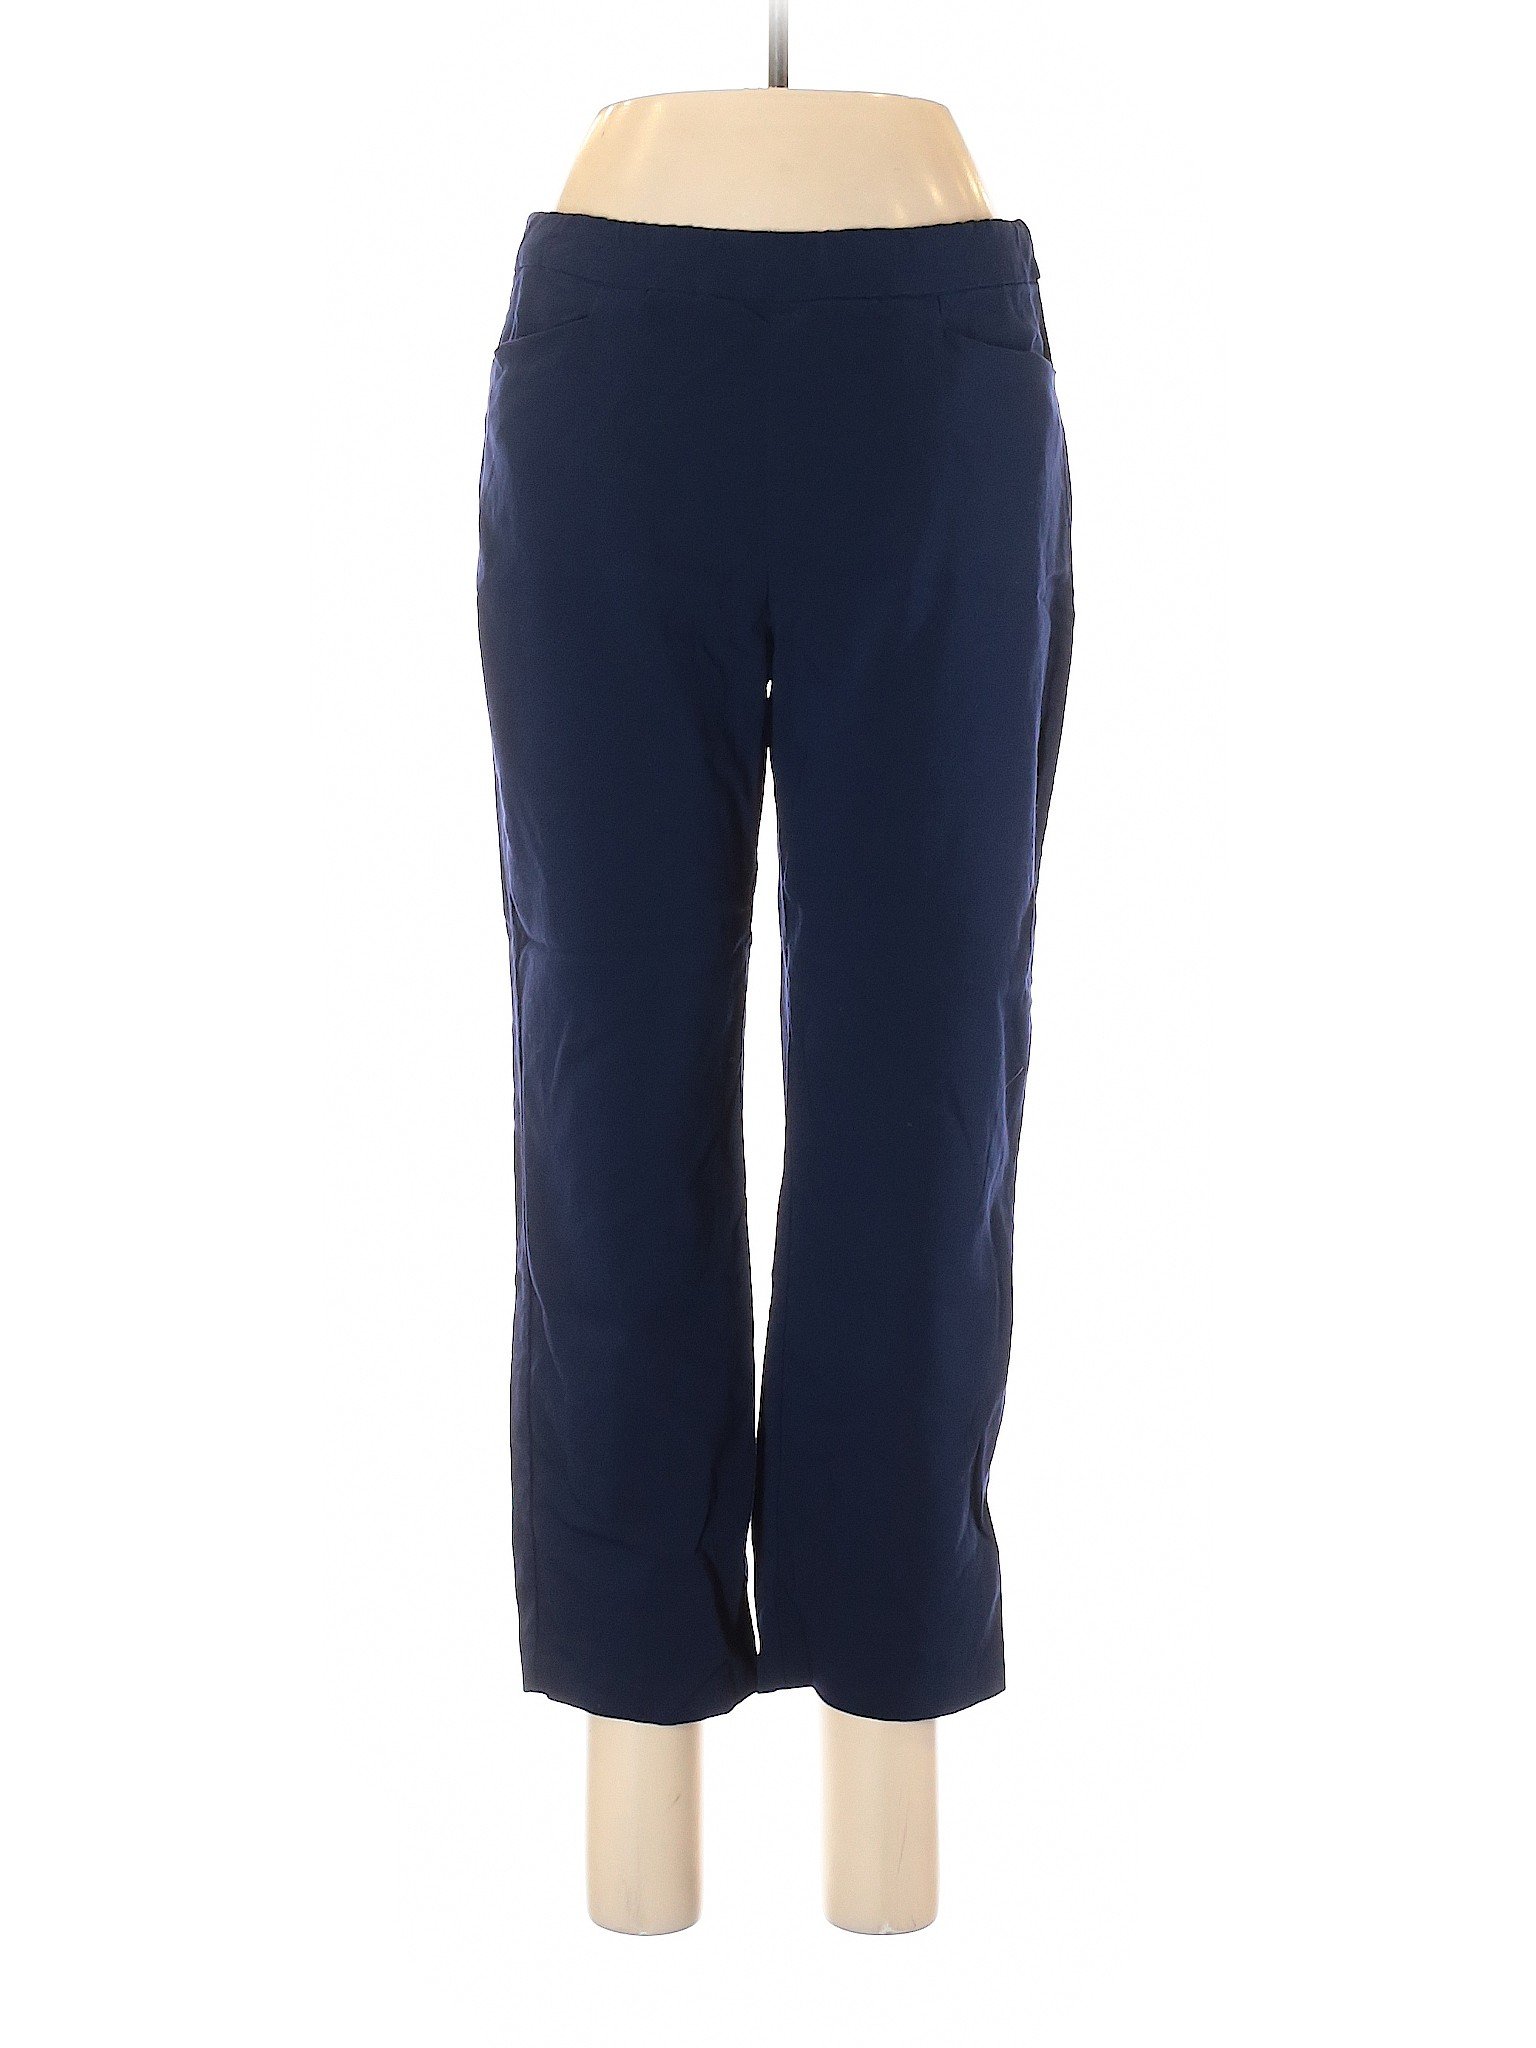 Susan Graver Women Blue Velour Pants 12 | eBay